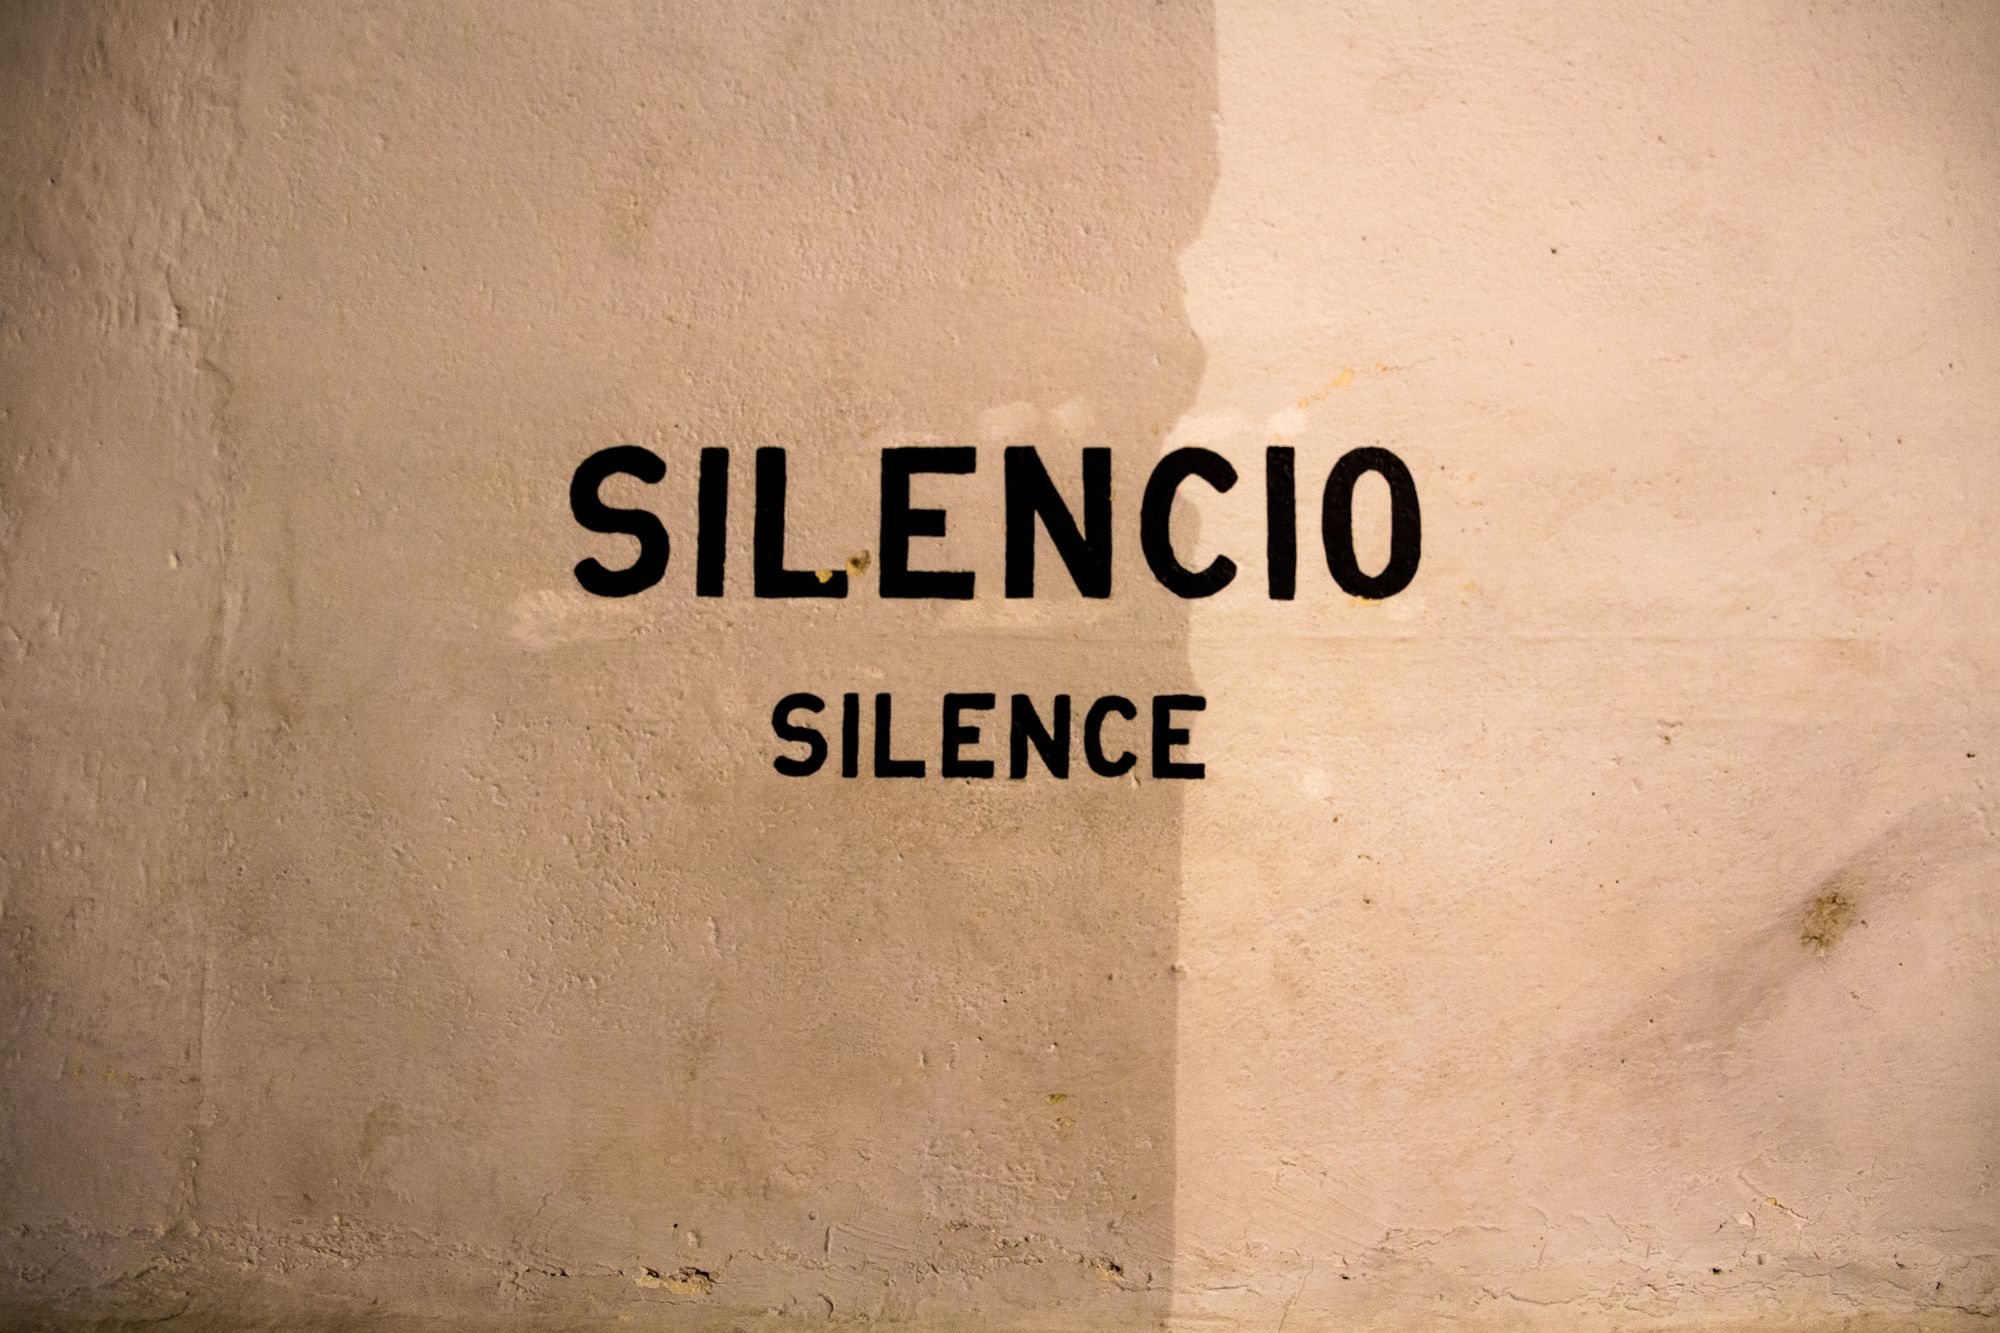 Seek out silence